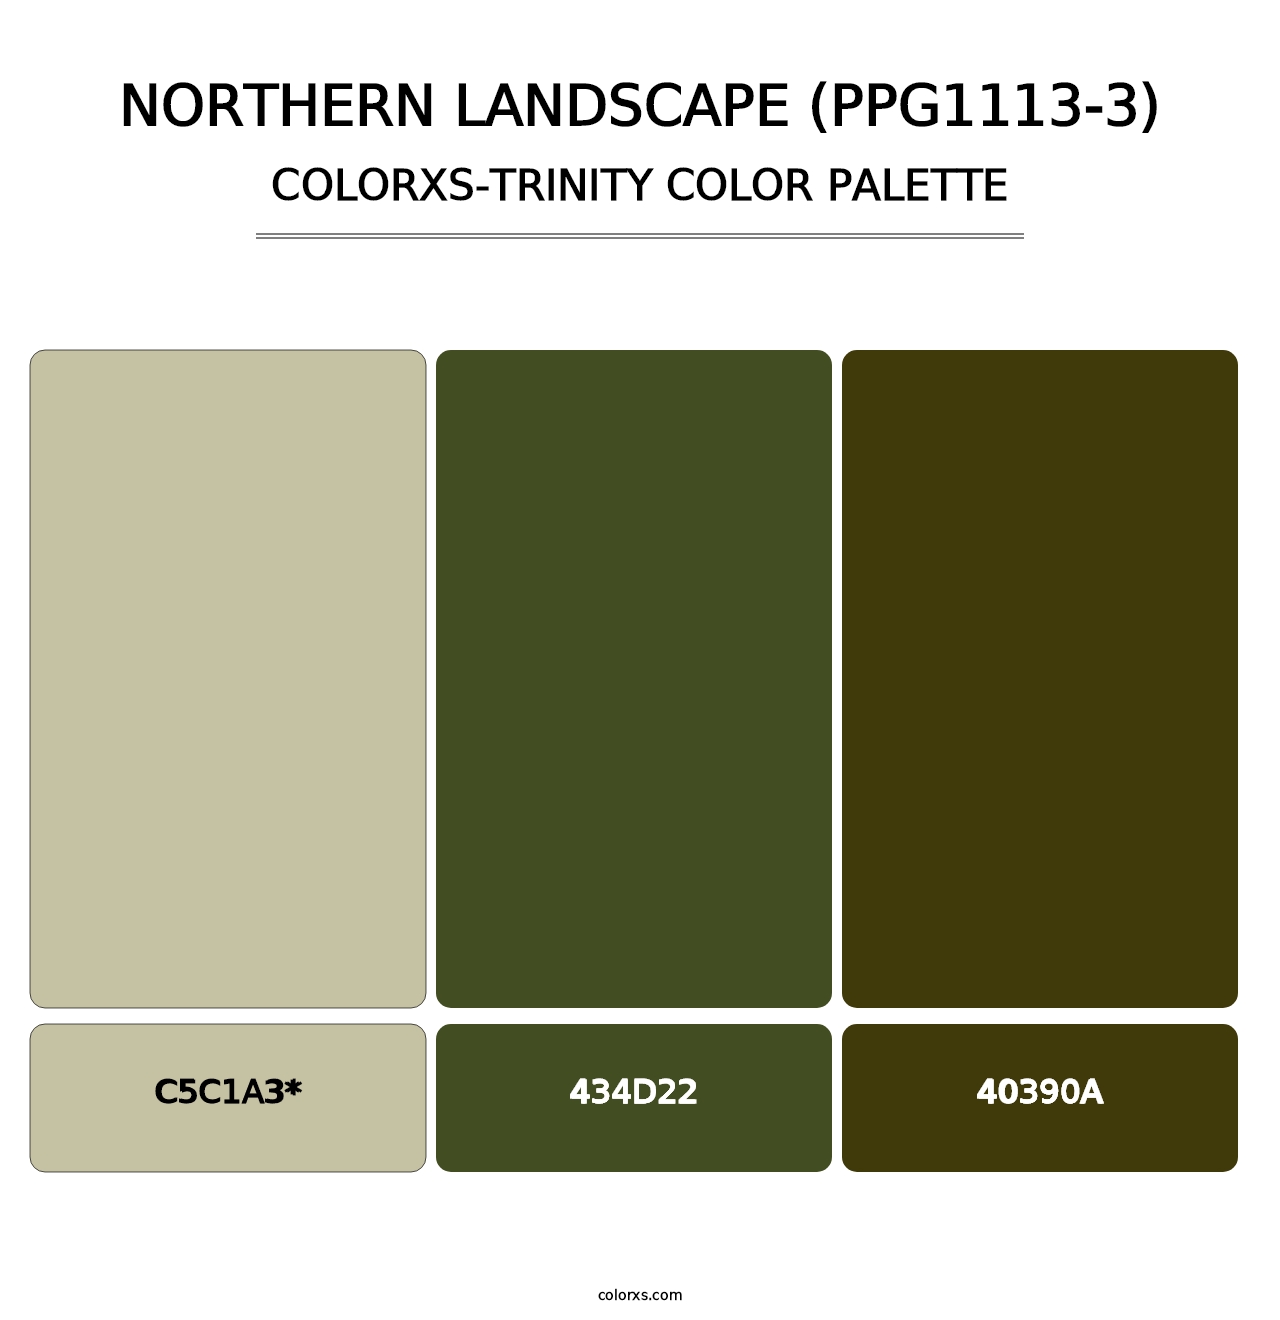 Northern Landscape (PPG1113-3) - Colorxs Trinity Palette